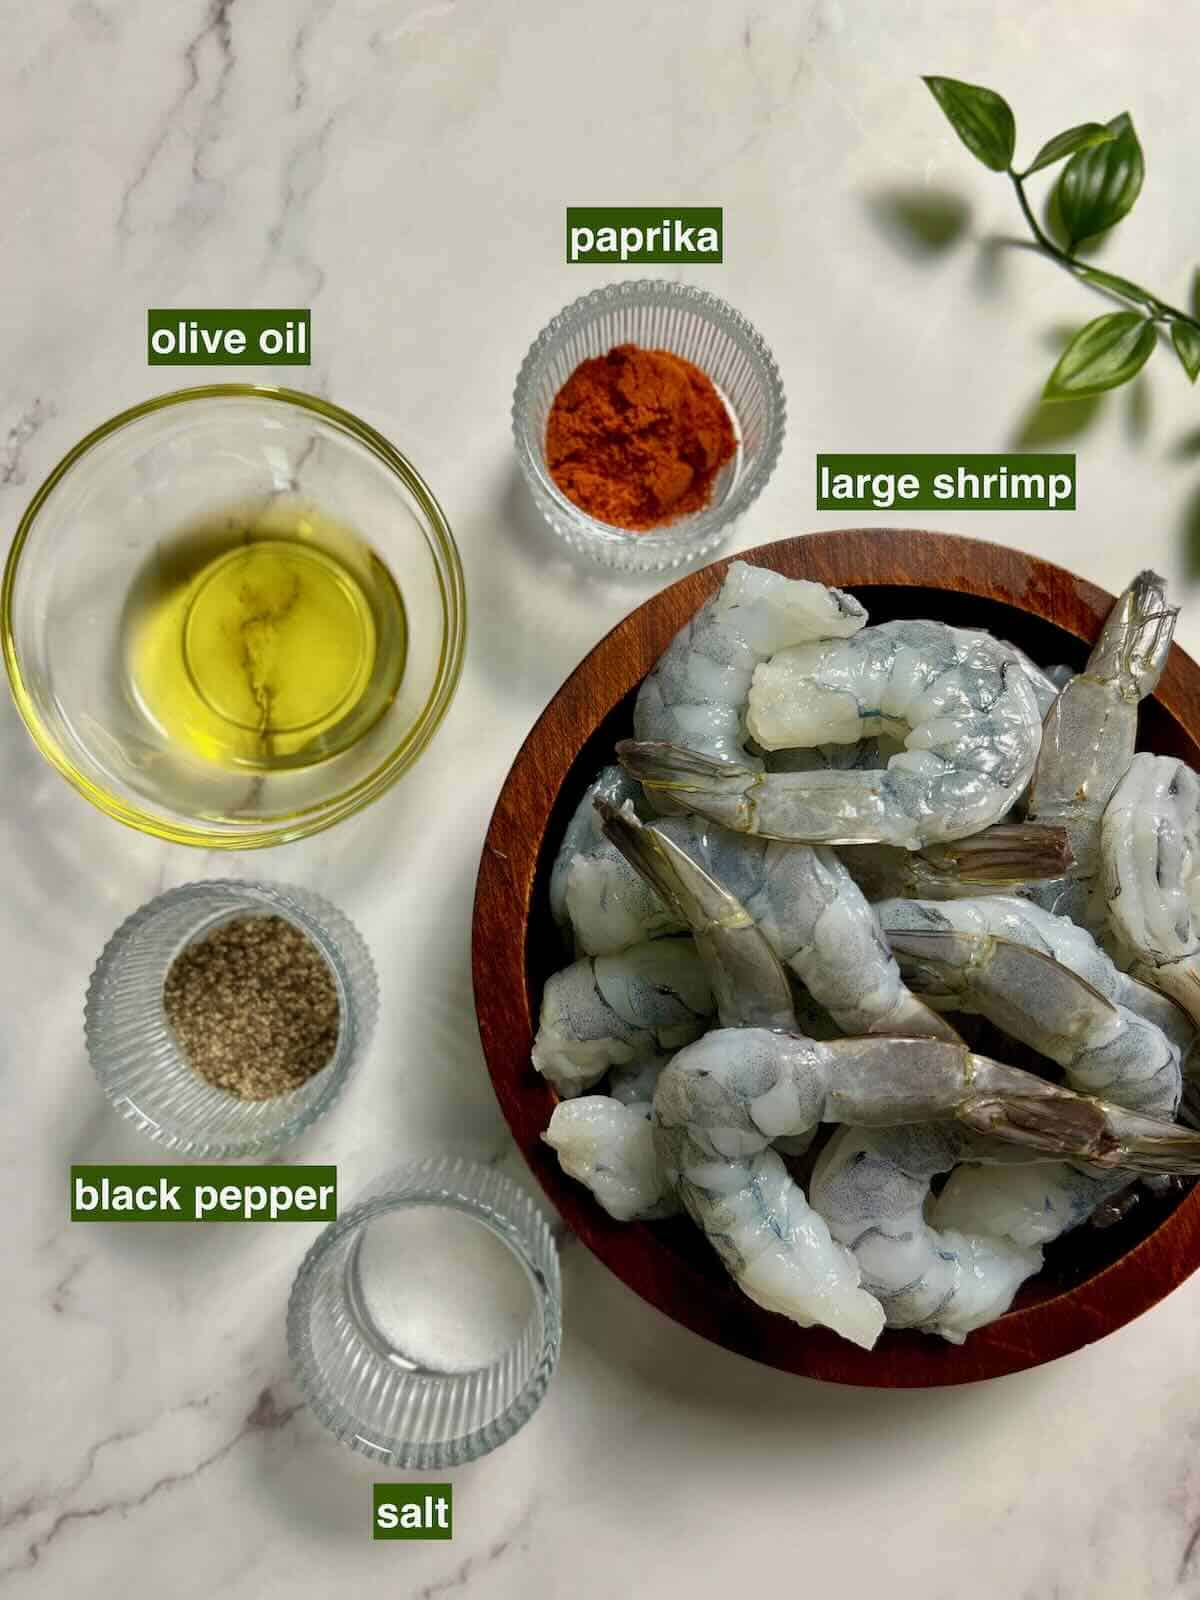 ingredients required for preparing shrimp for the chimichurri shrimp recipe